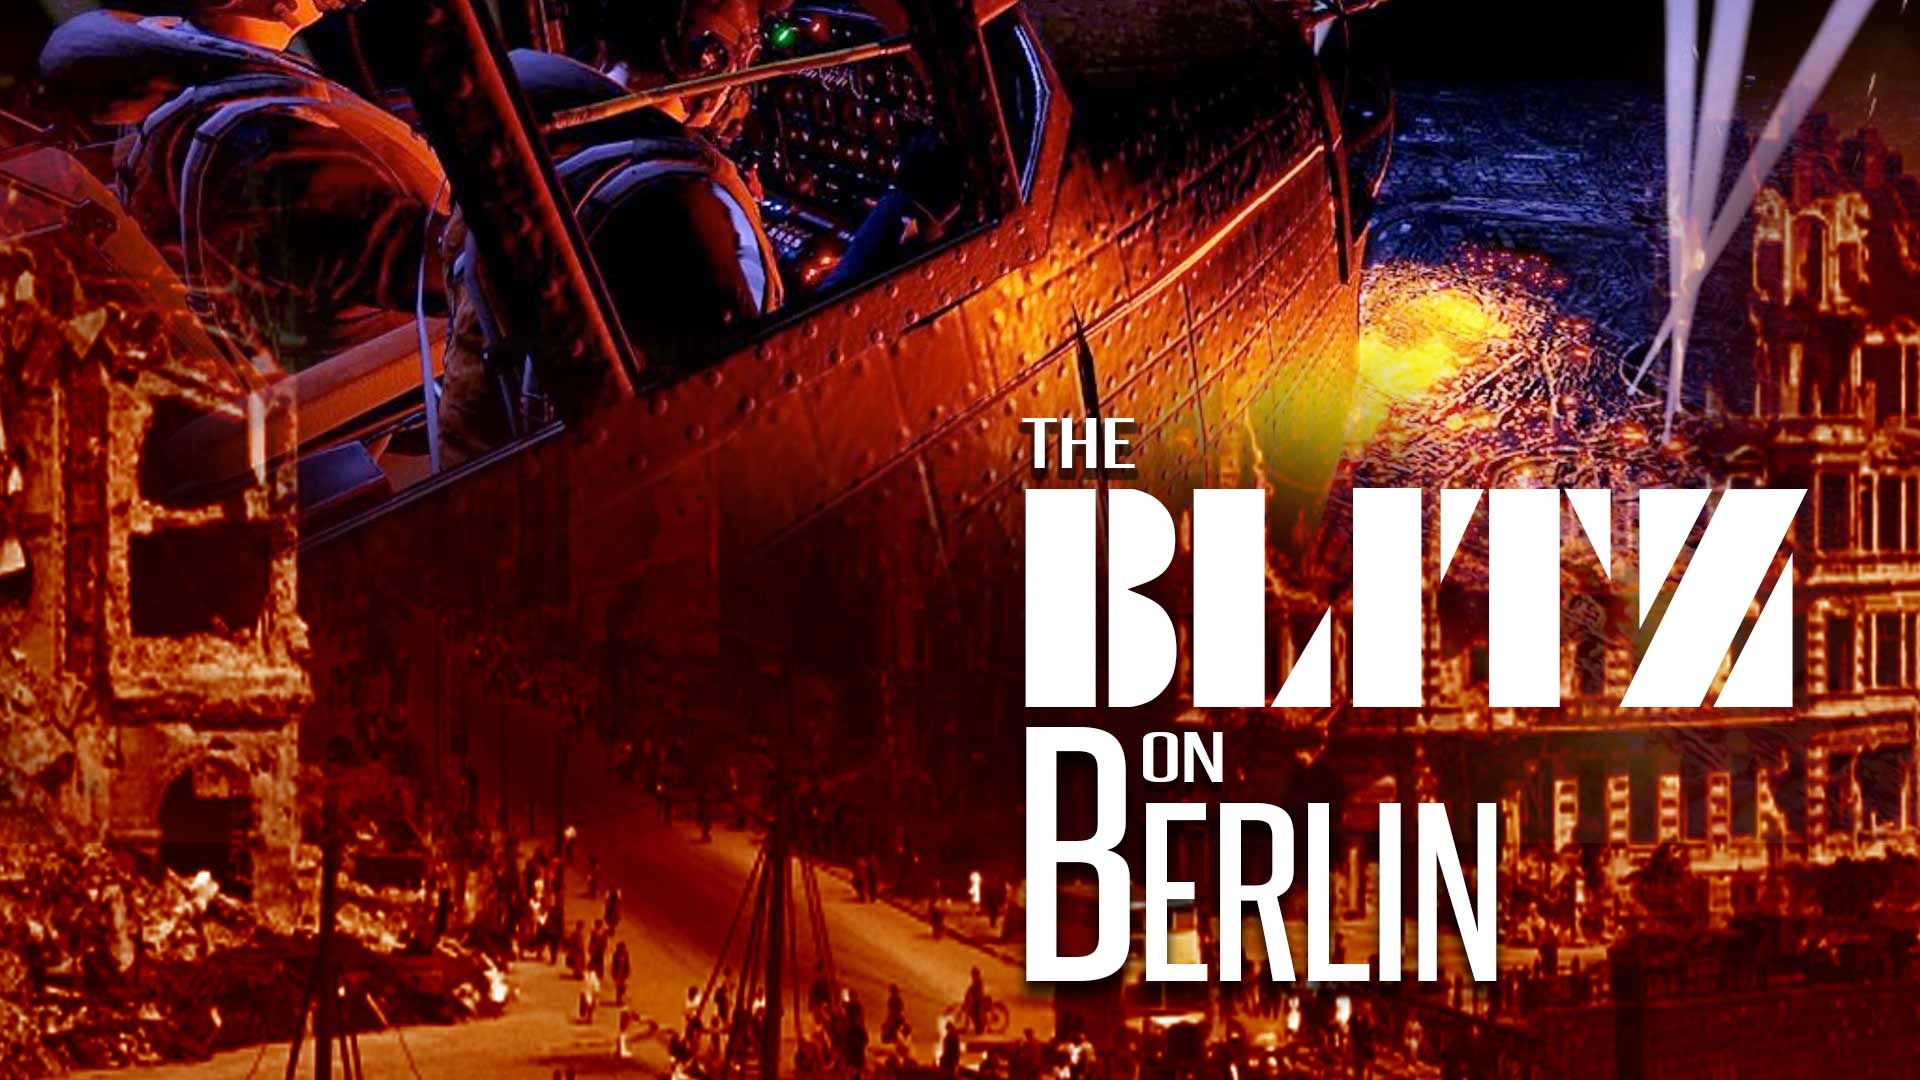 The Blitz on Berlin